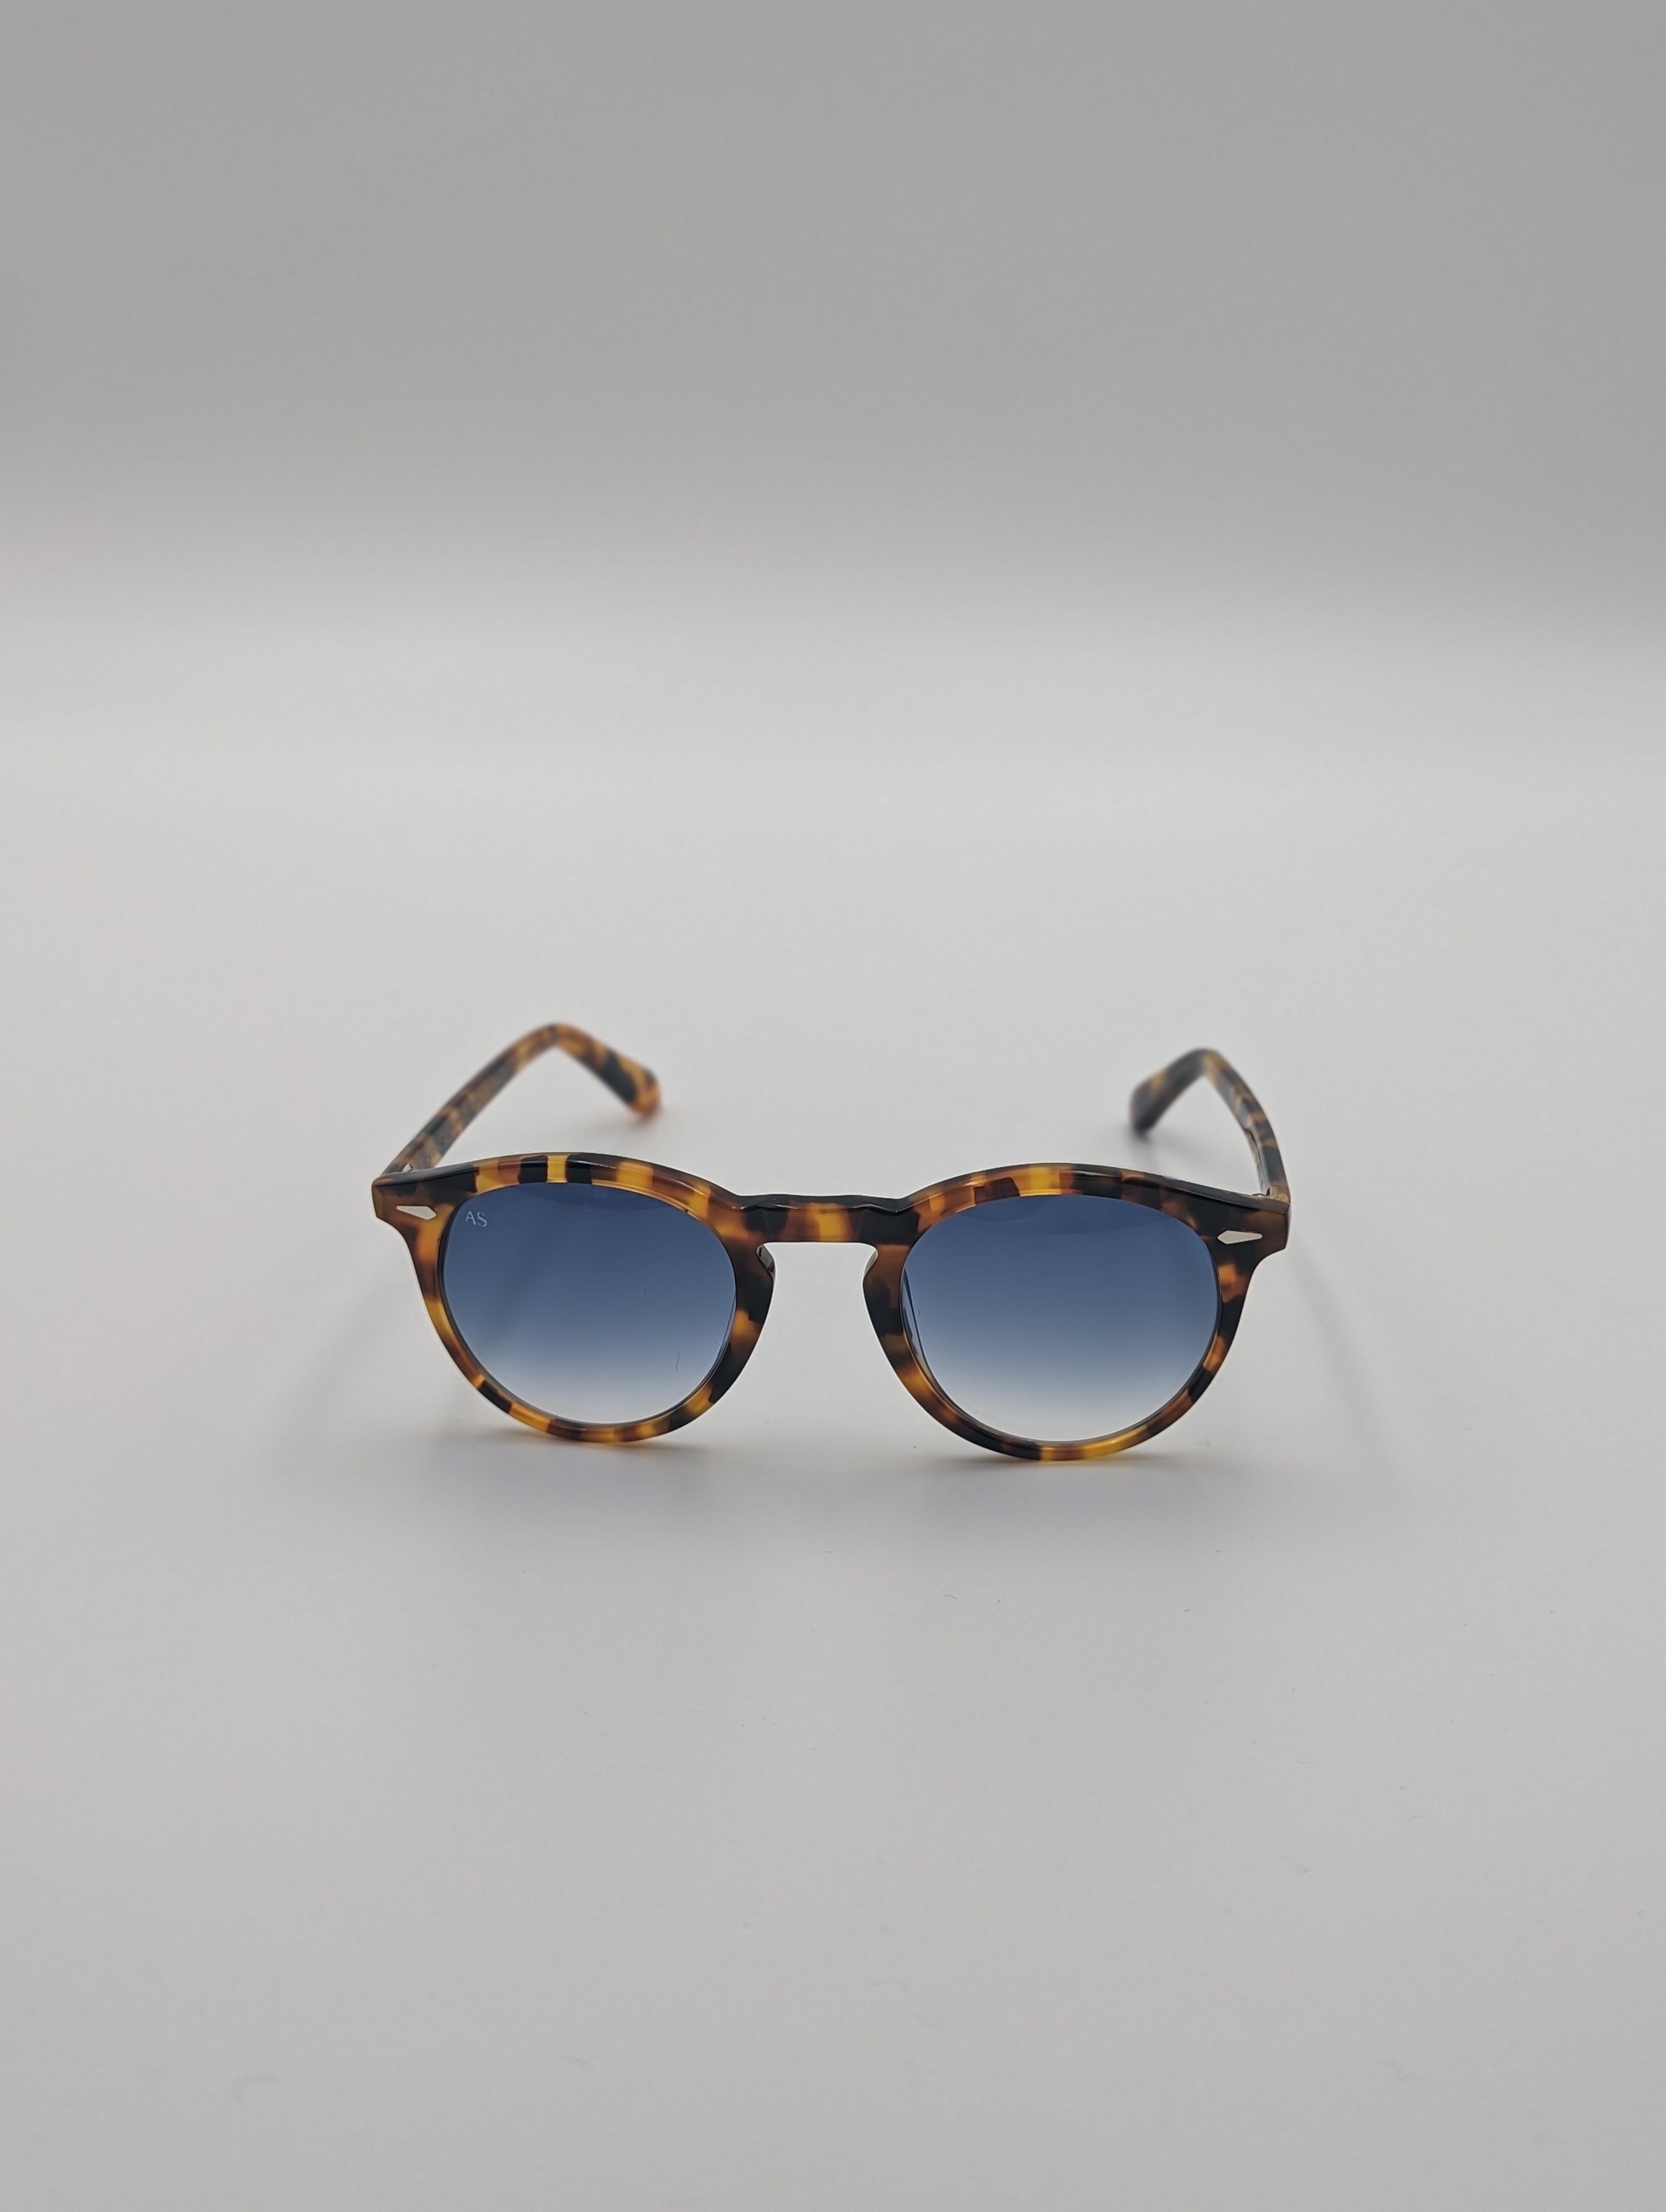 Sunglasses Iconic - Wasp